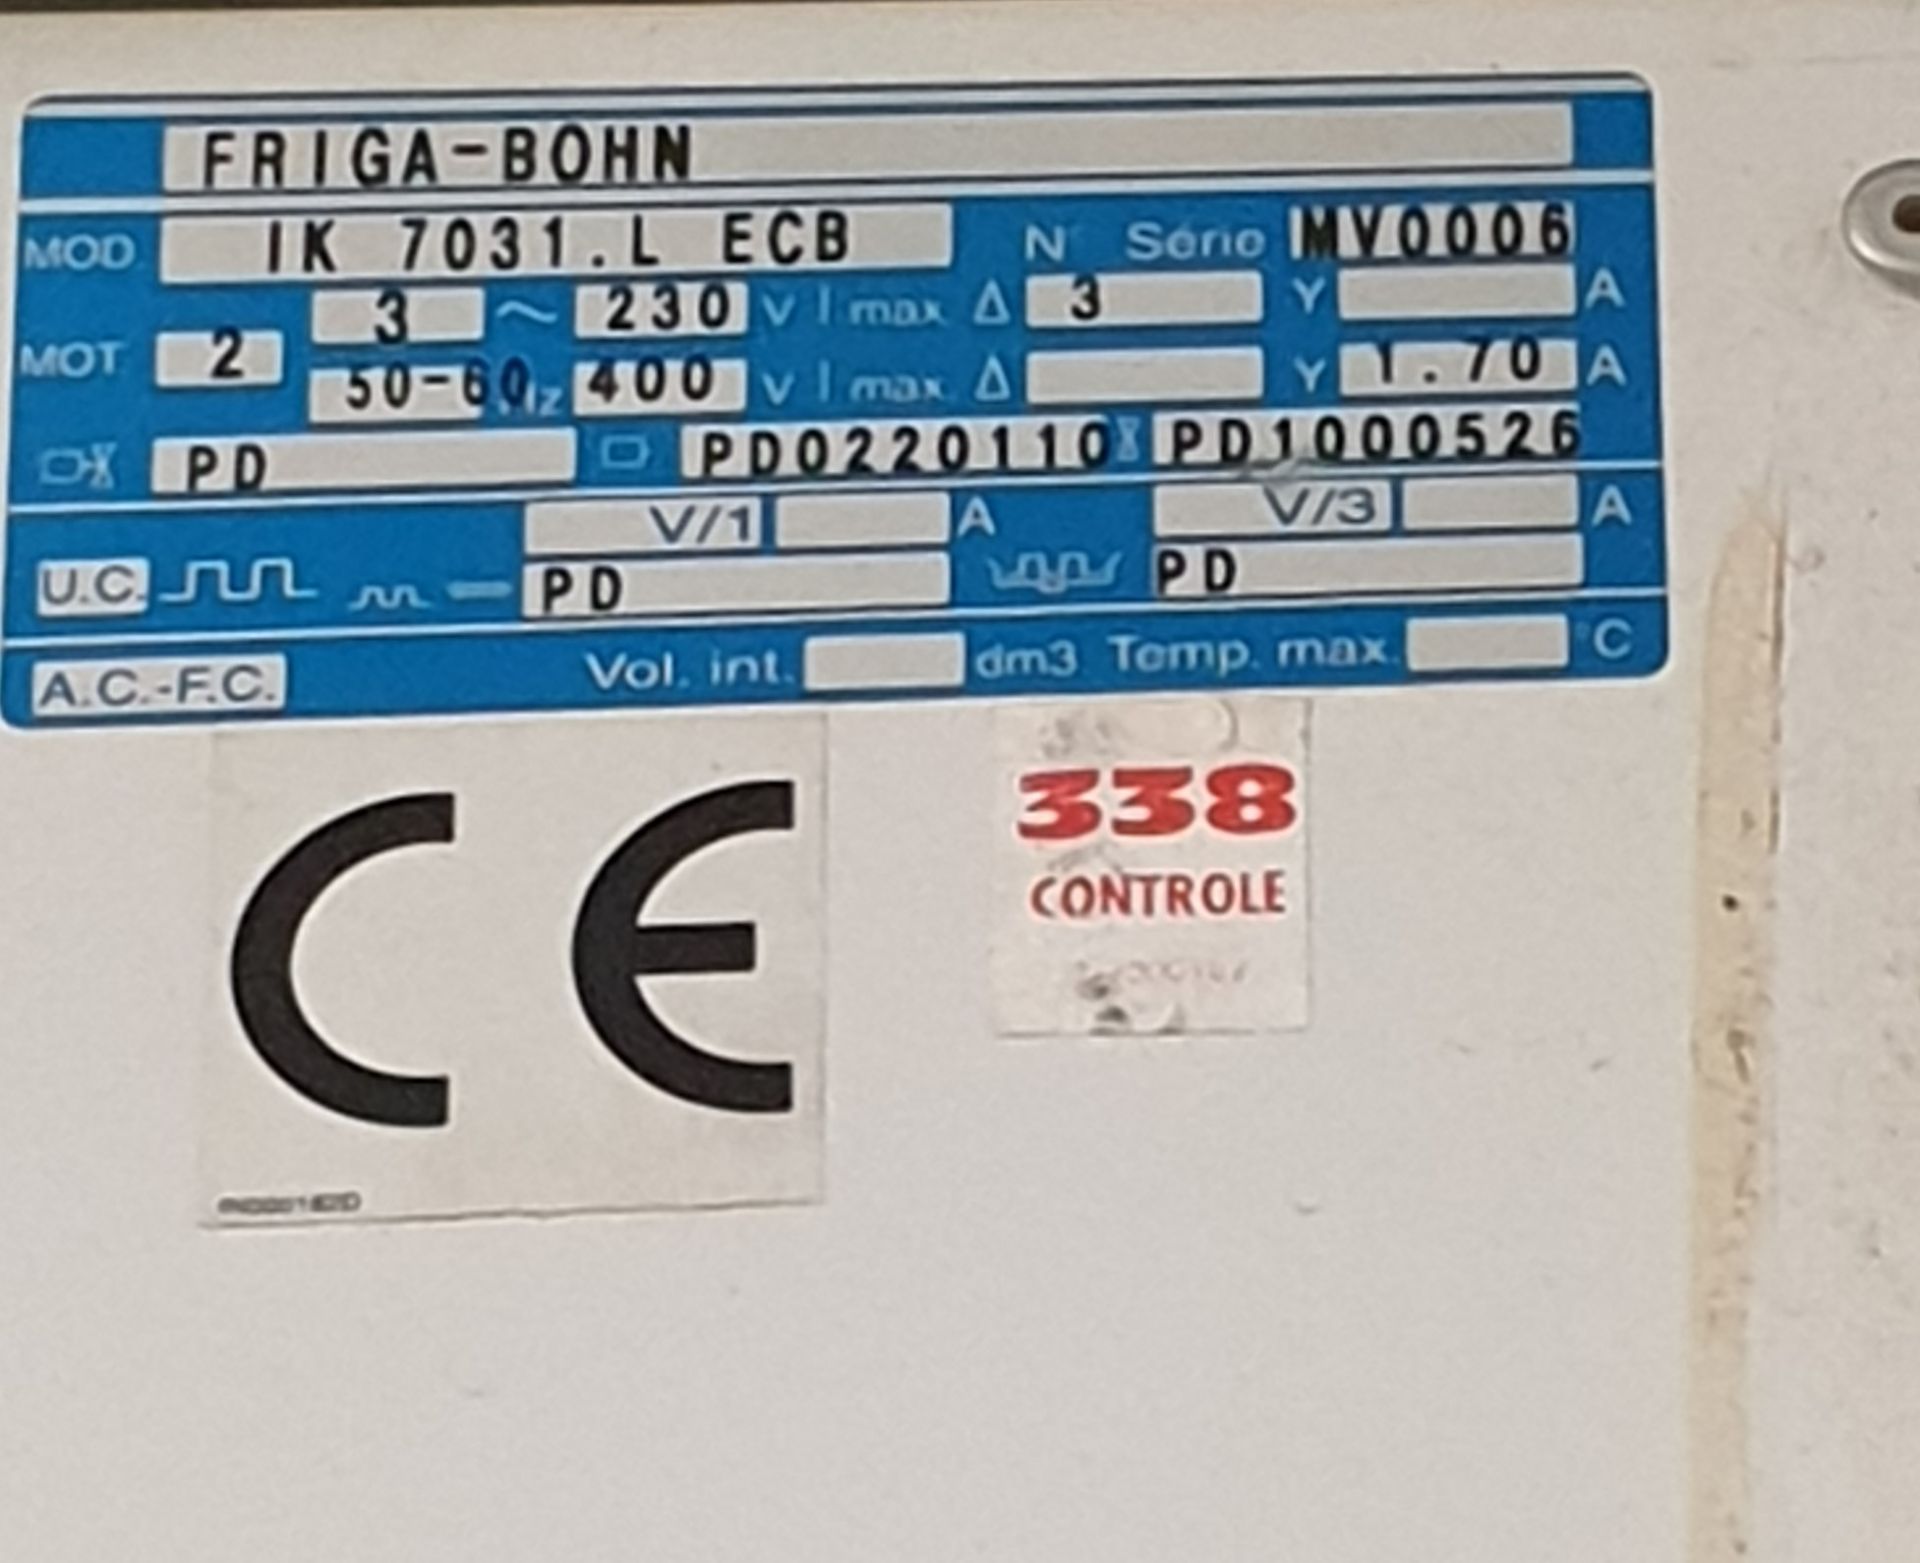 Friga Bohn Husky IK7031.L ECB 2 Fan Chiller Unit, Serial Number: MV0006 - Image 2 of 2